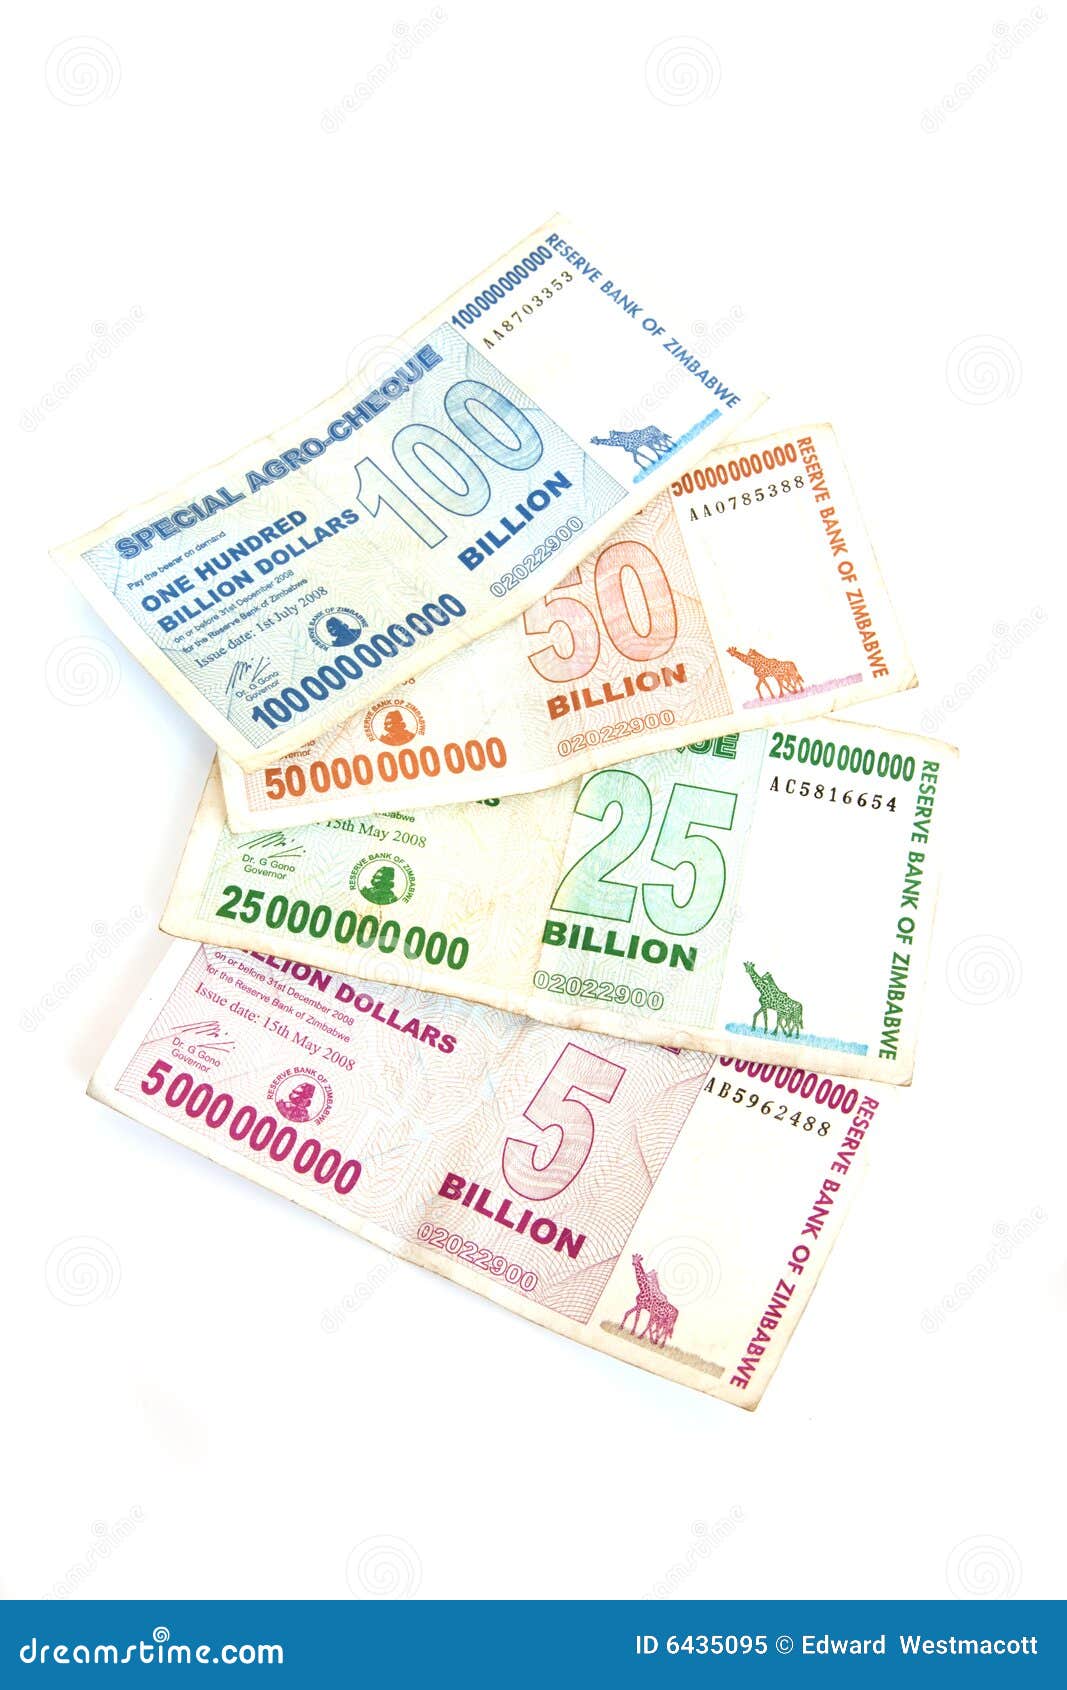 zimbabwe billion dollar notes